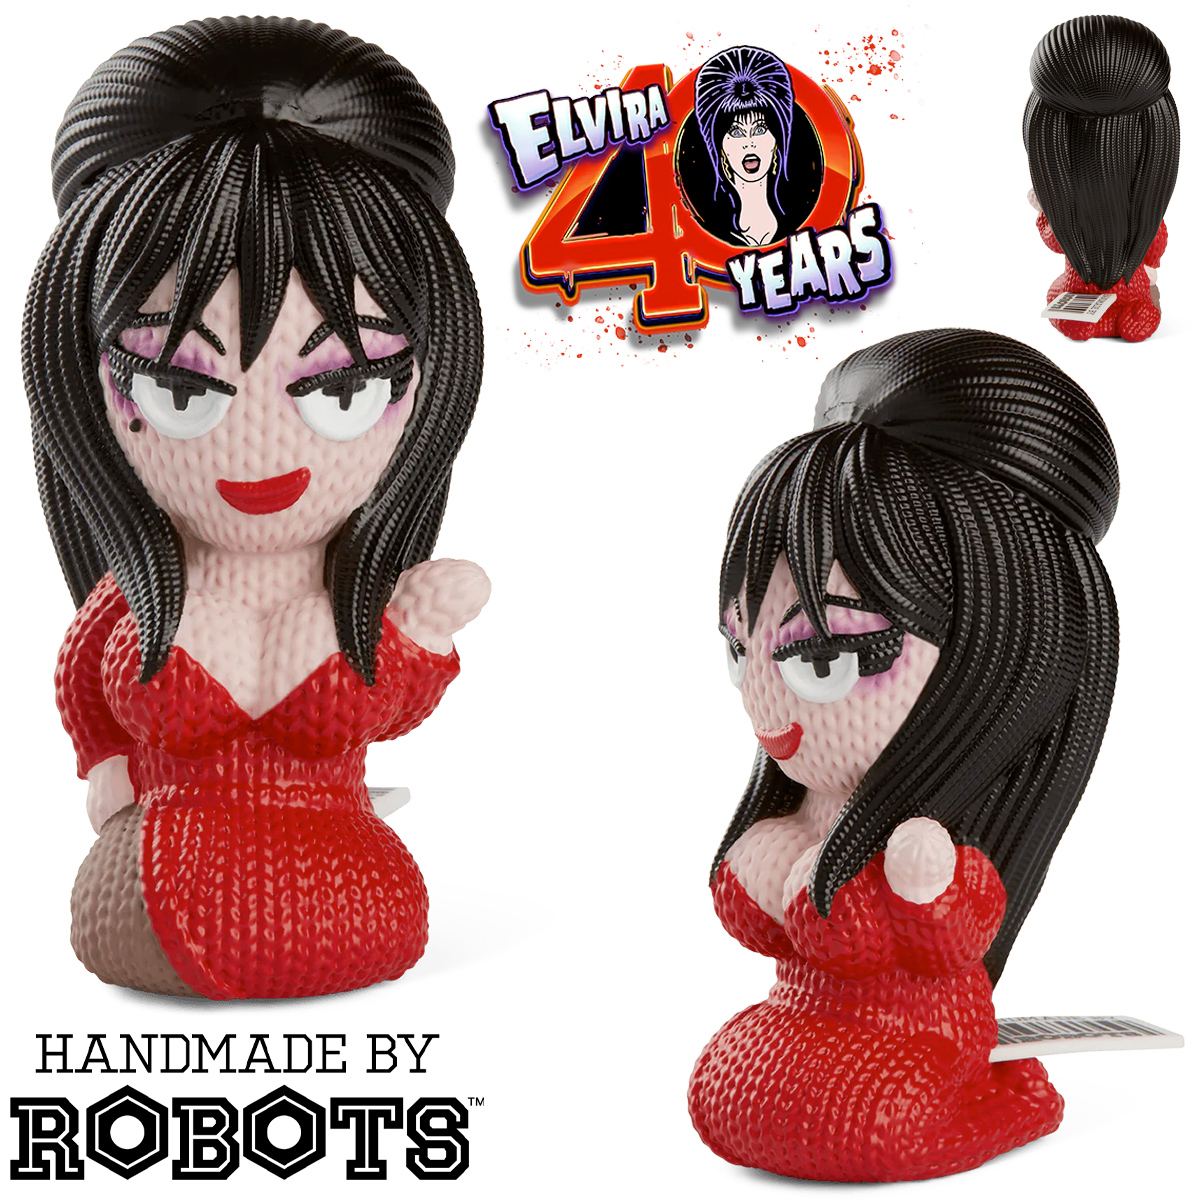 Elvira, a Rainha das Trevas Handmade By Robots - Boneca de Vinil no Estilo Crochê Amigurumi